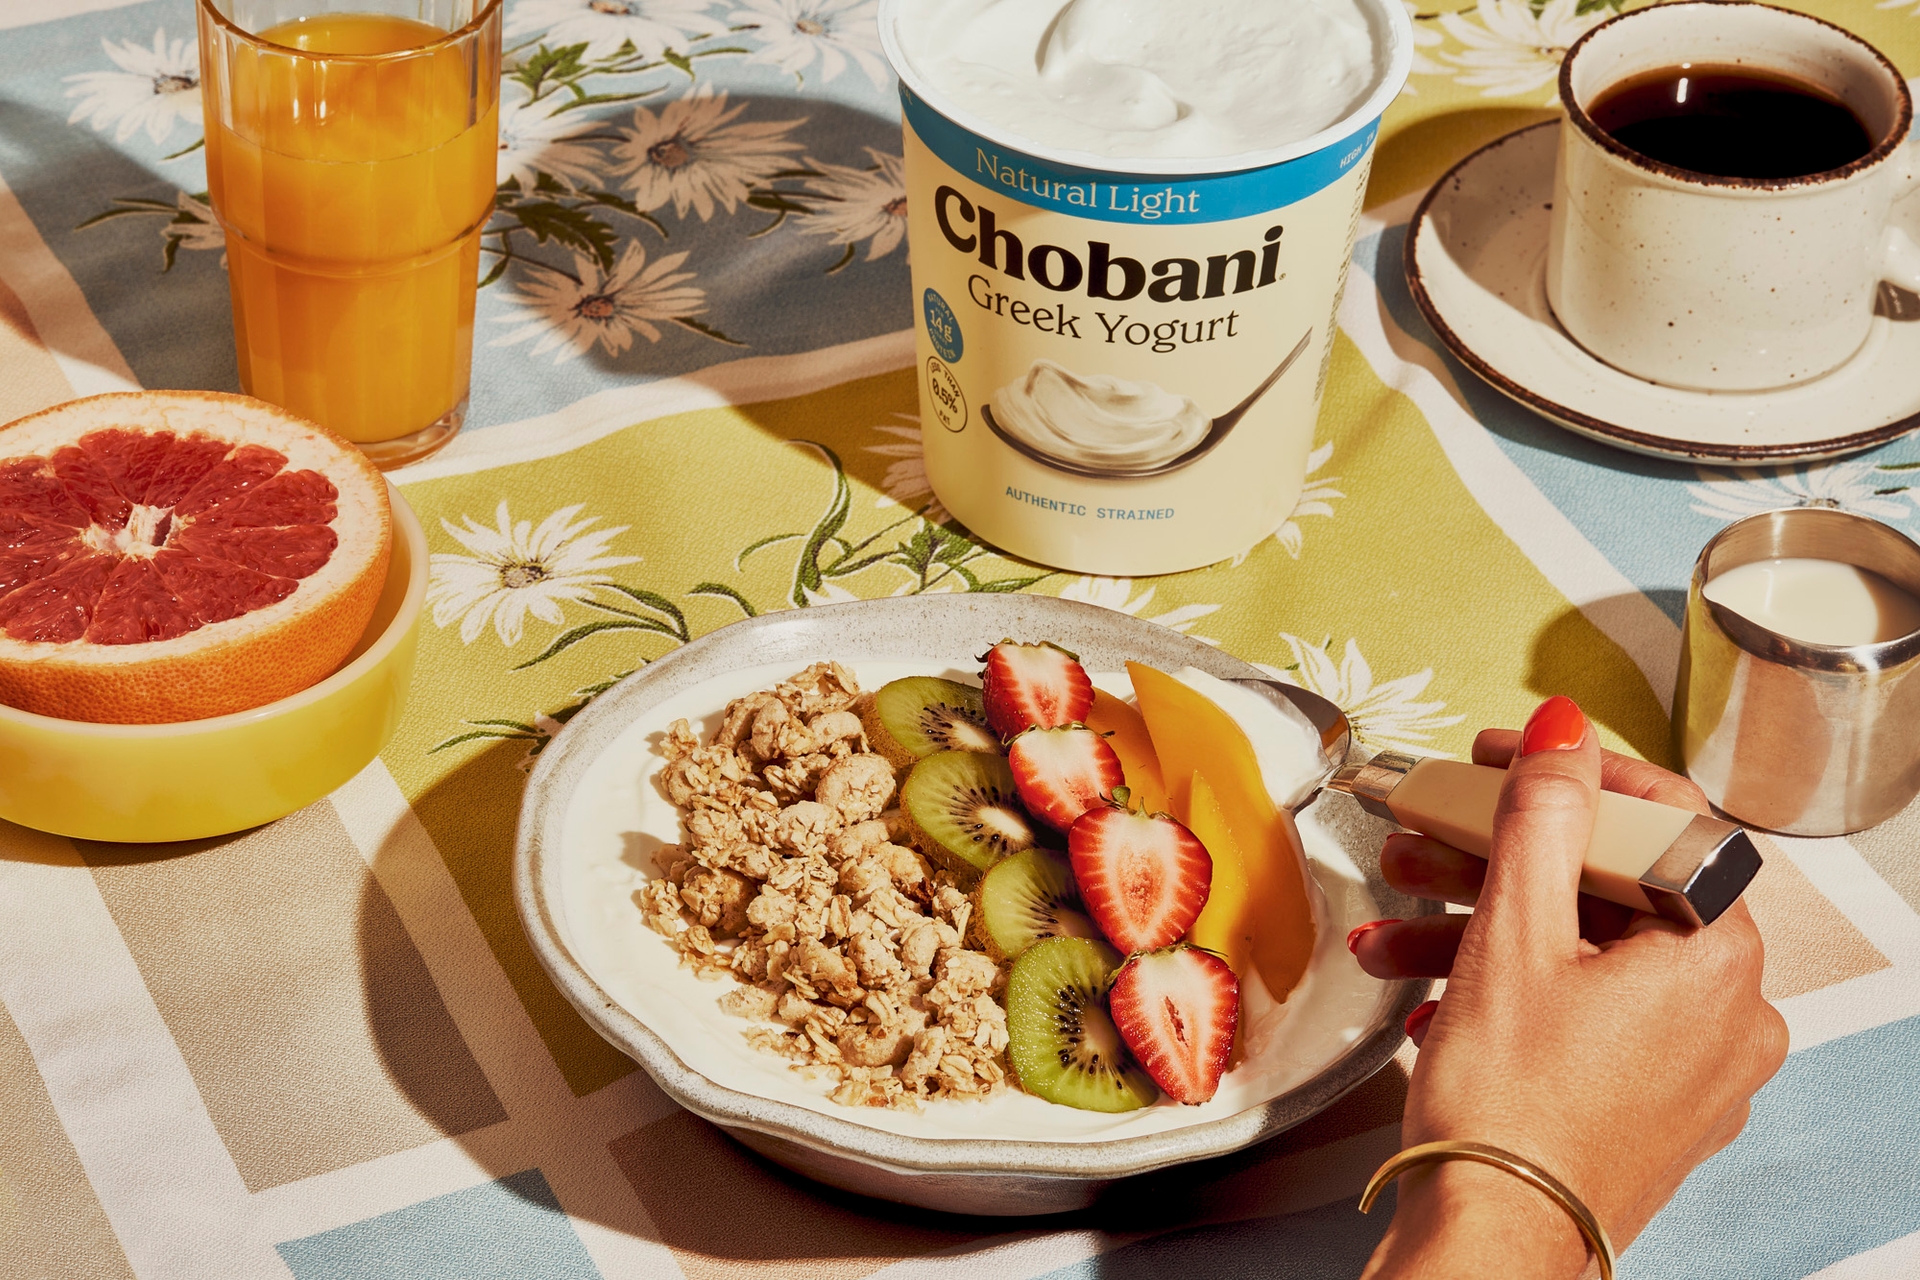 Retro breakfast with Chobani Natural Greek Yogurt, packaging design by Our Revolution